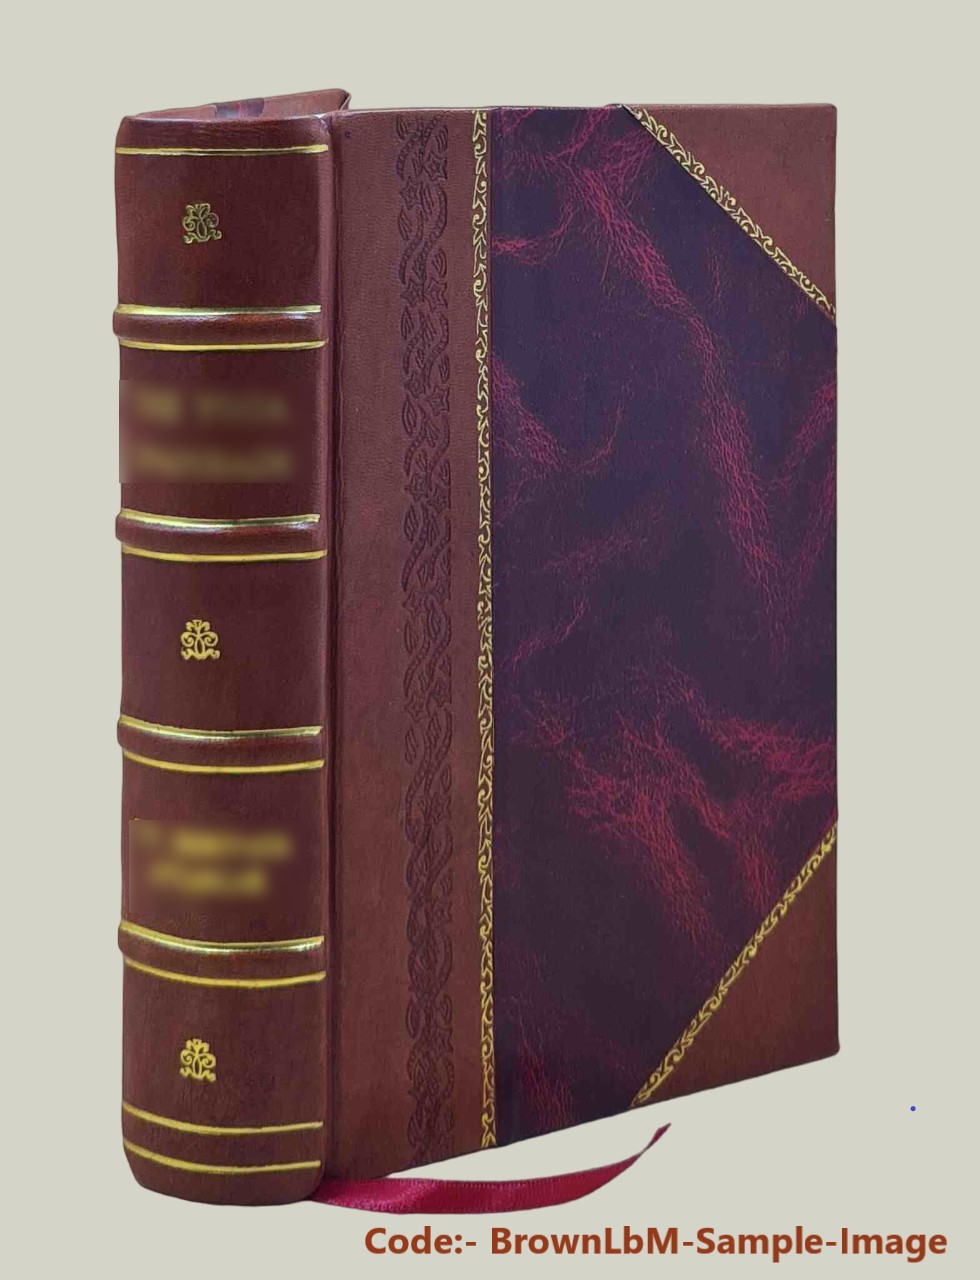 Insula sanctorum et doctorum : or, Ireland's ancient schools and scholars / by John Healy. 1912 [Leather Bound] - Healy, John, Archbishop, -.